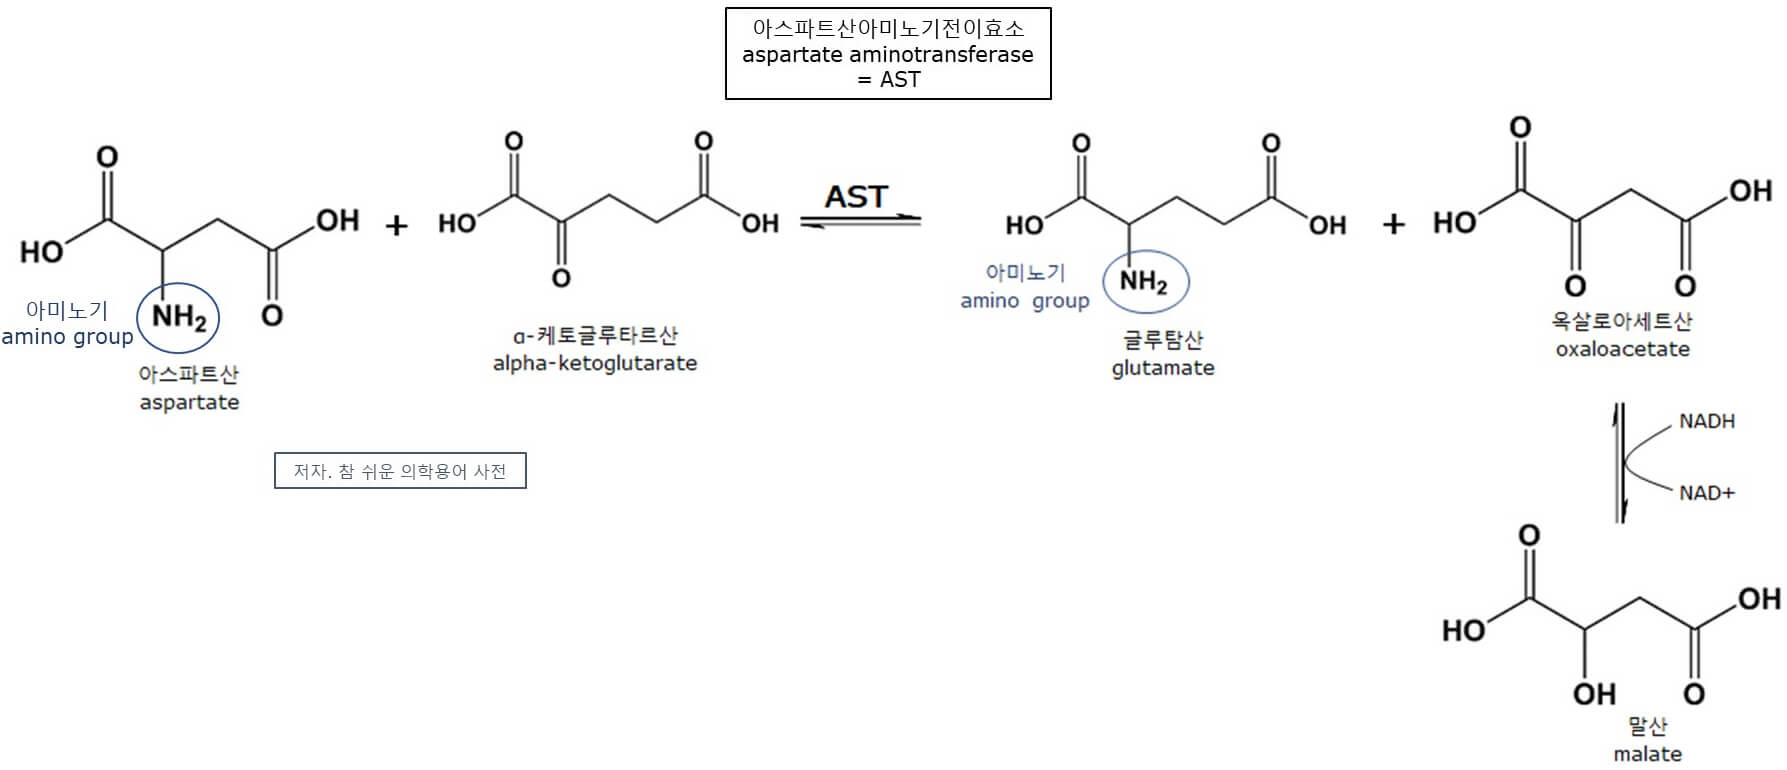 aspartate aminotransferase 뜻